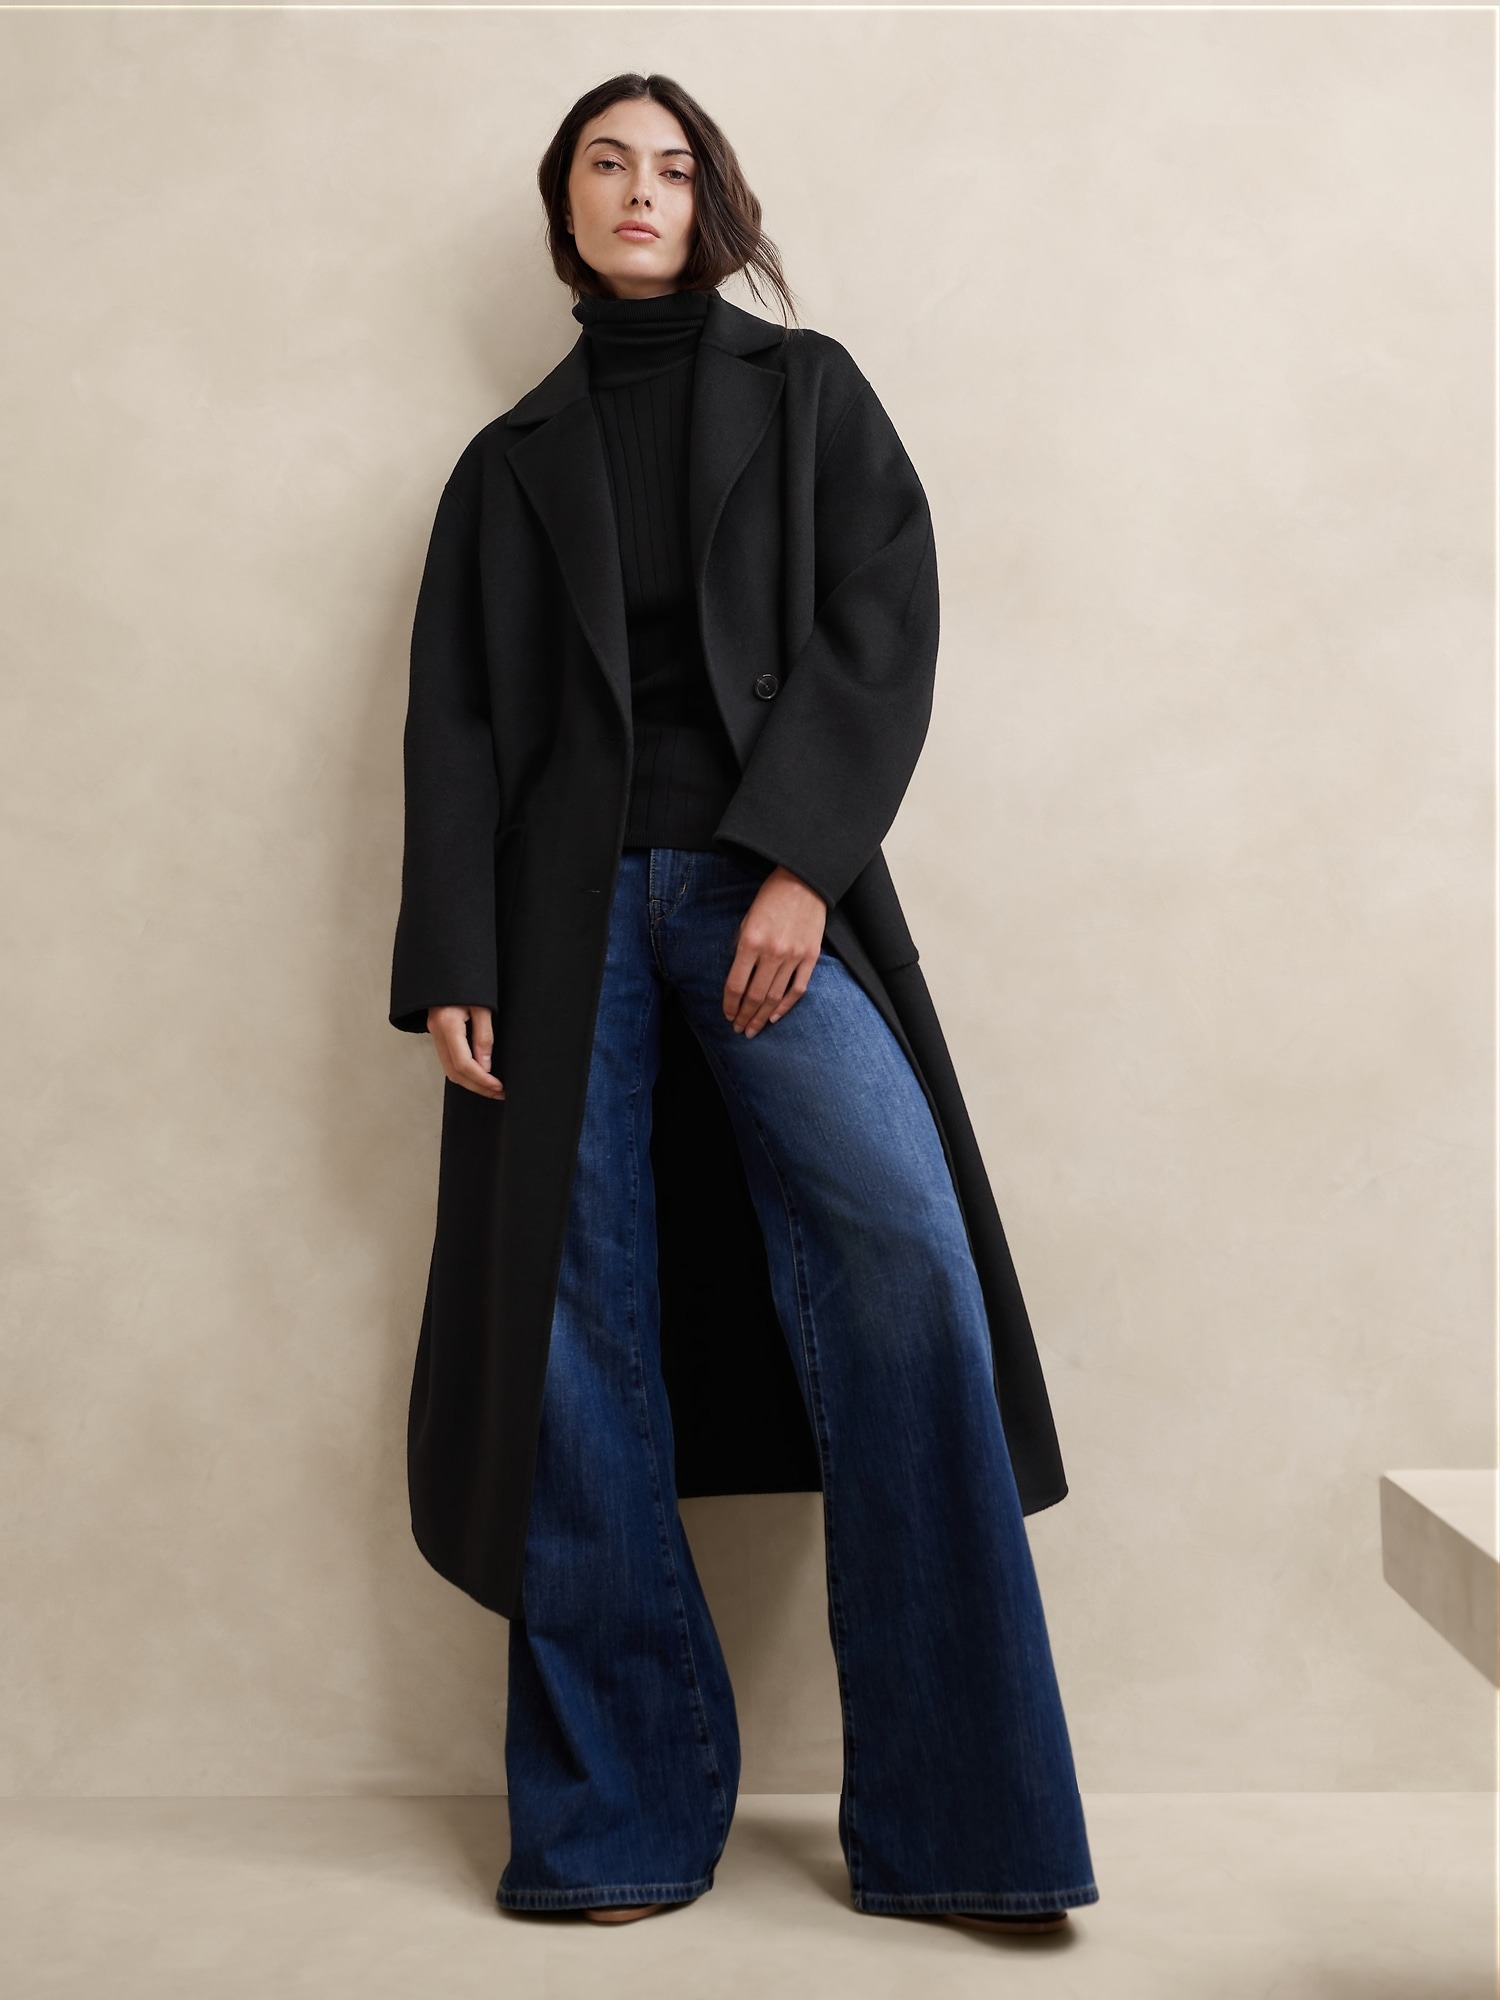 29 Stylish Long Wool Coats for Women | Who What Wear